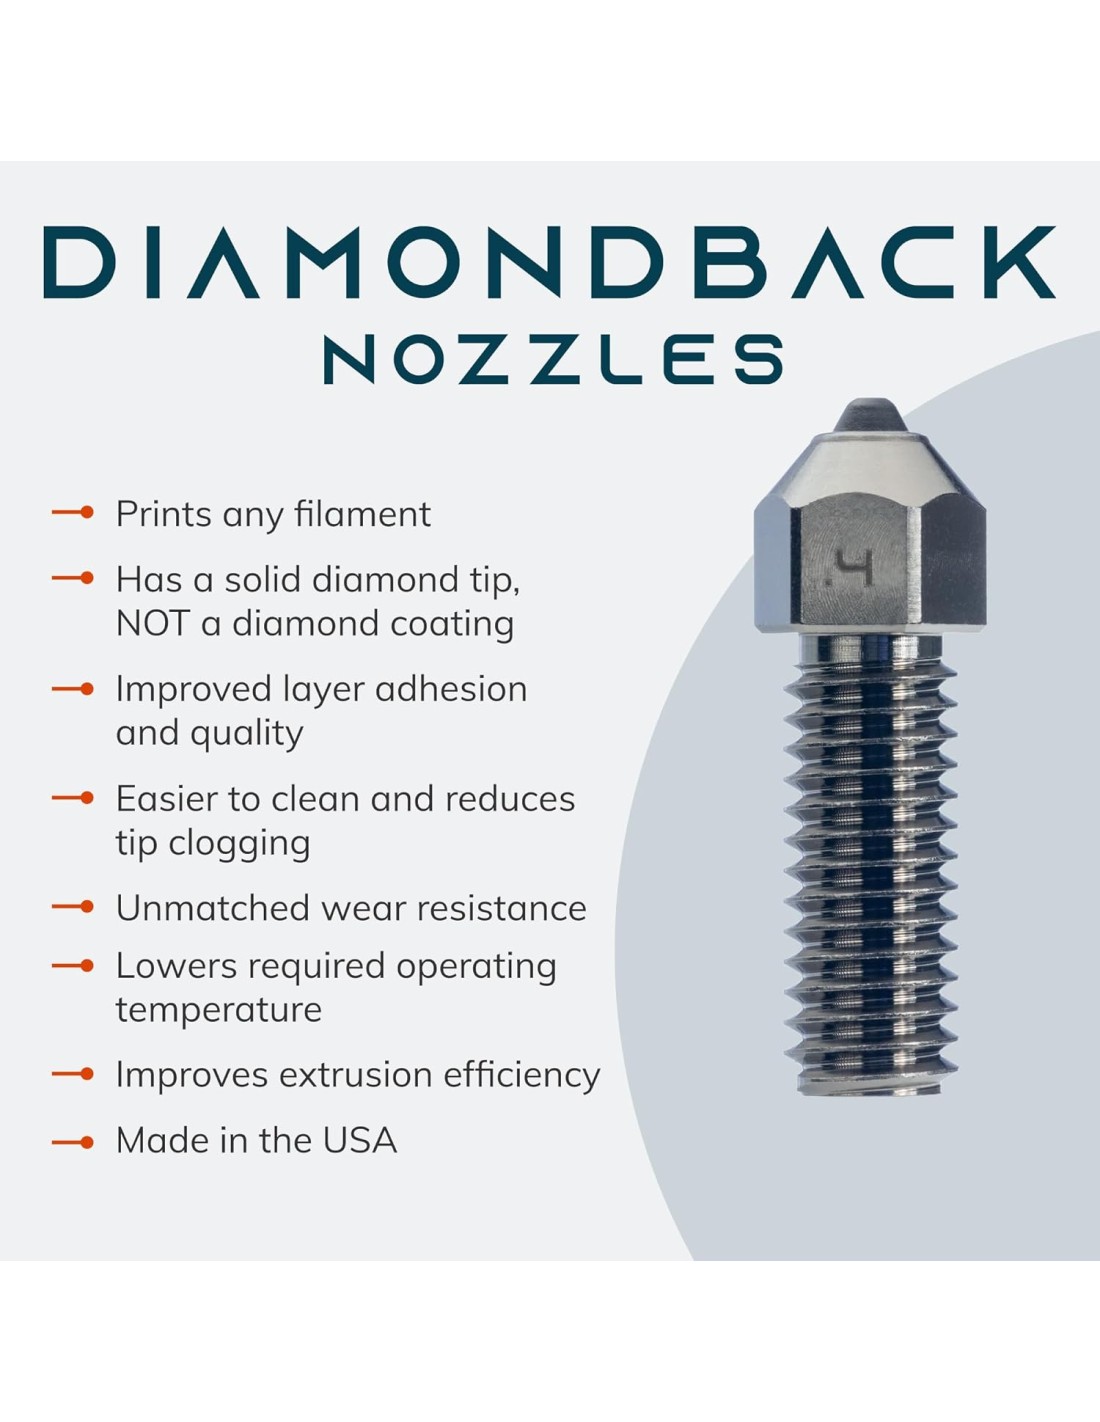 DiamondBack K1 kompatibel dyse - 0,6 mm